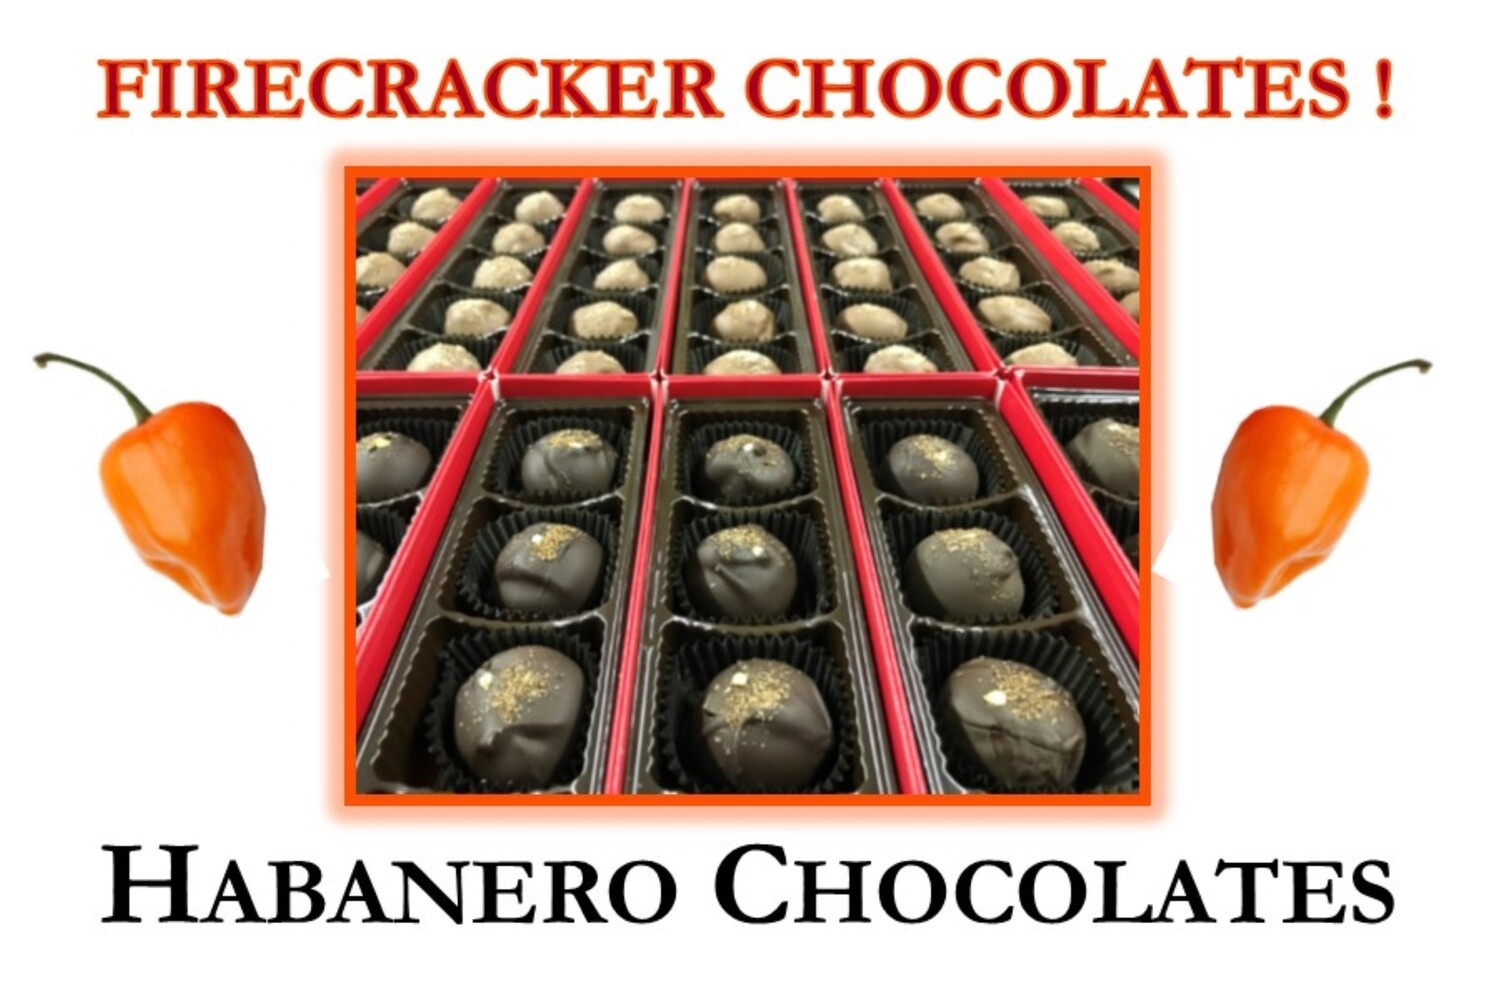 Habanero Firecracker Chocolates